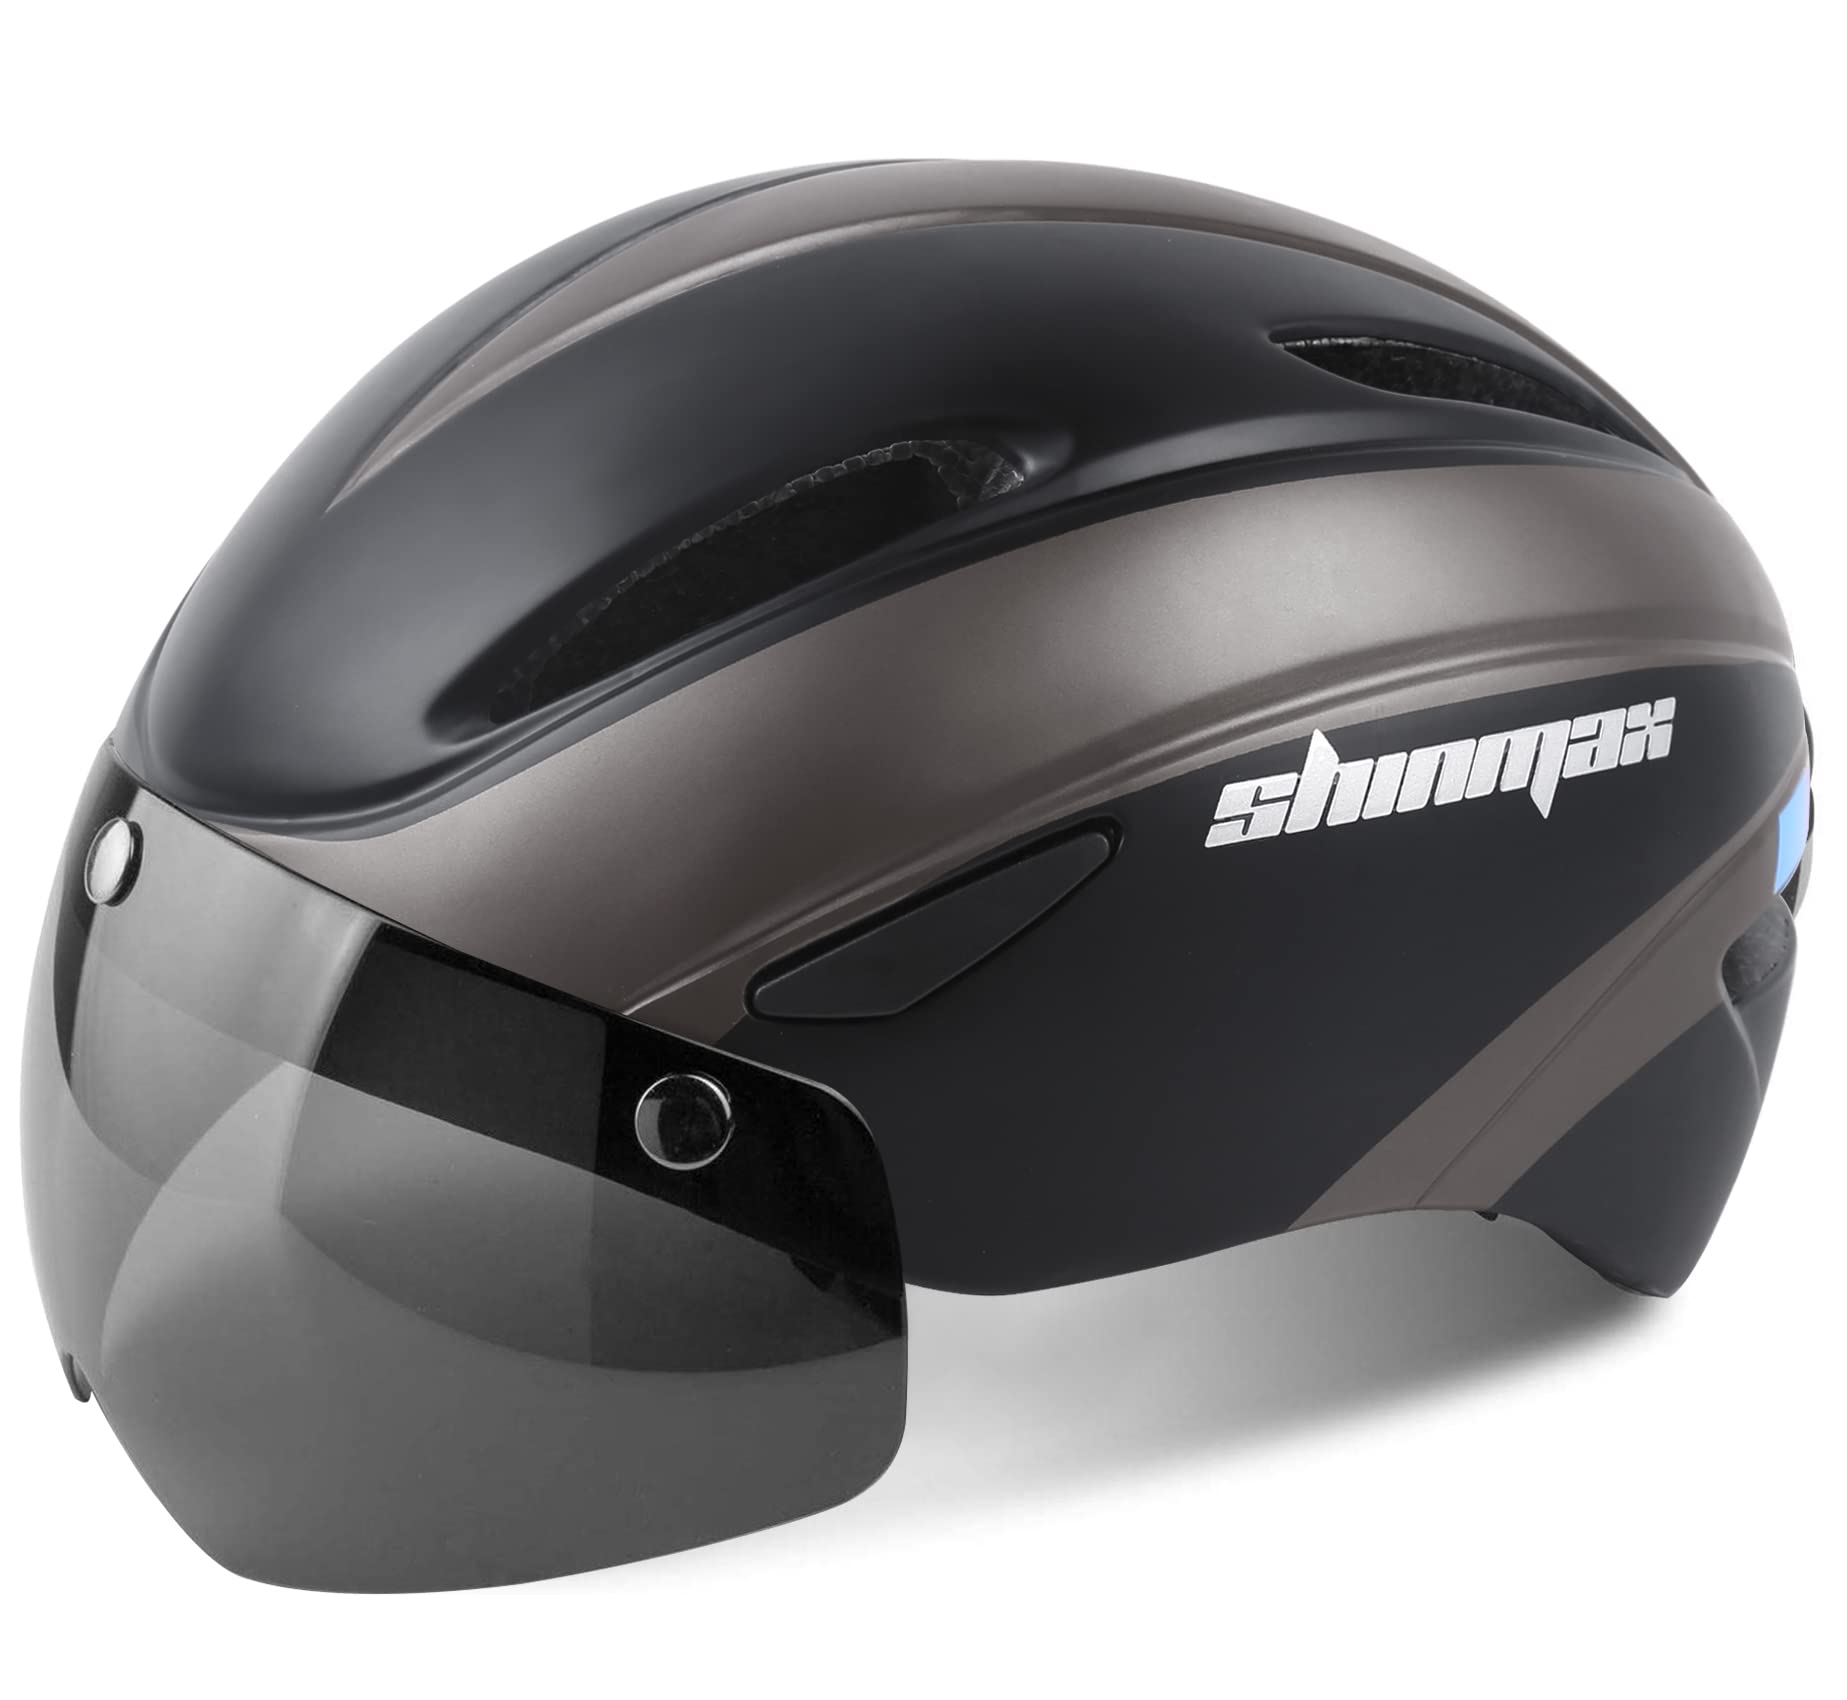 Shinmax 自転車 ヘルメット 大人 ロードバイク ヘルメット CPSC認証済み 通勤 通学 超軽量 高剛性 男性 女性 小五以上適 通気 磁気ゴーグル サイズ調整可能 56-61cm M/L 収納用袋付き 001式自転車ヘルメット (チタン・ブラック)